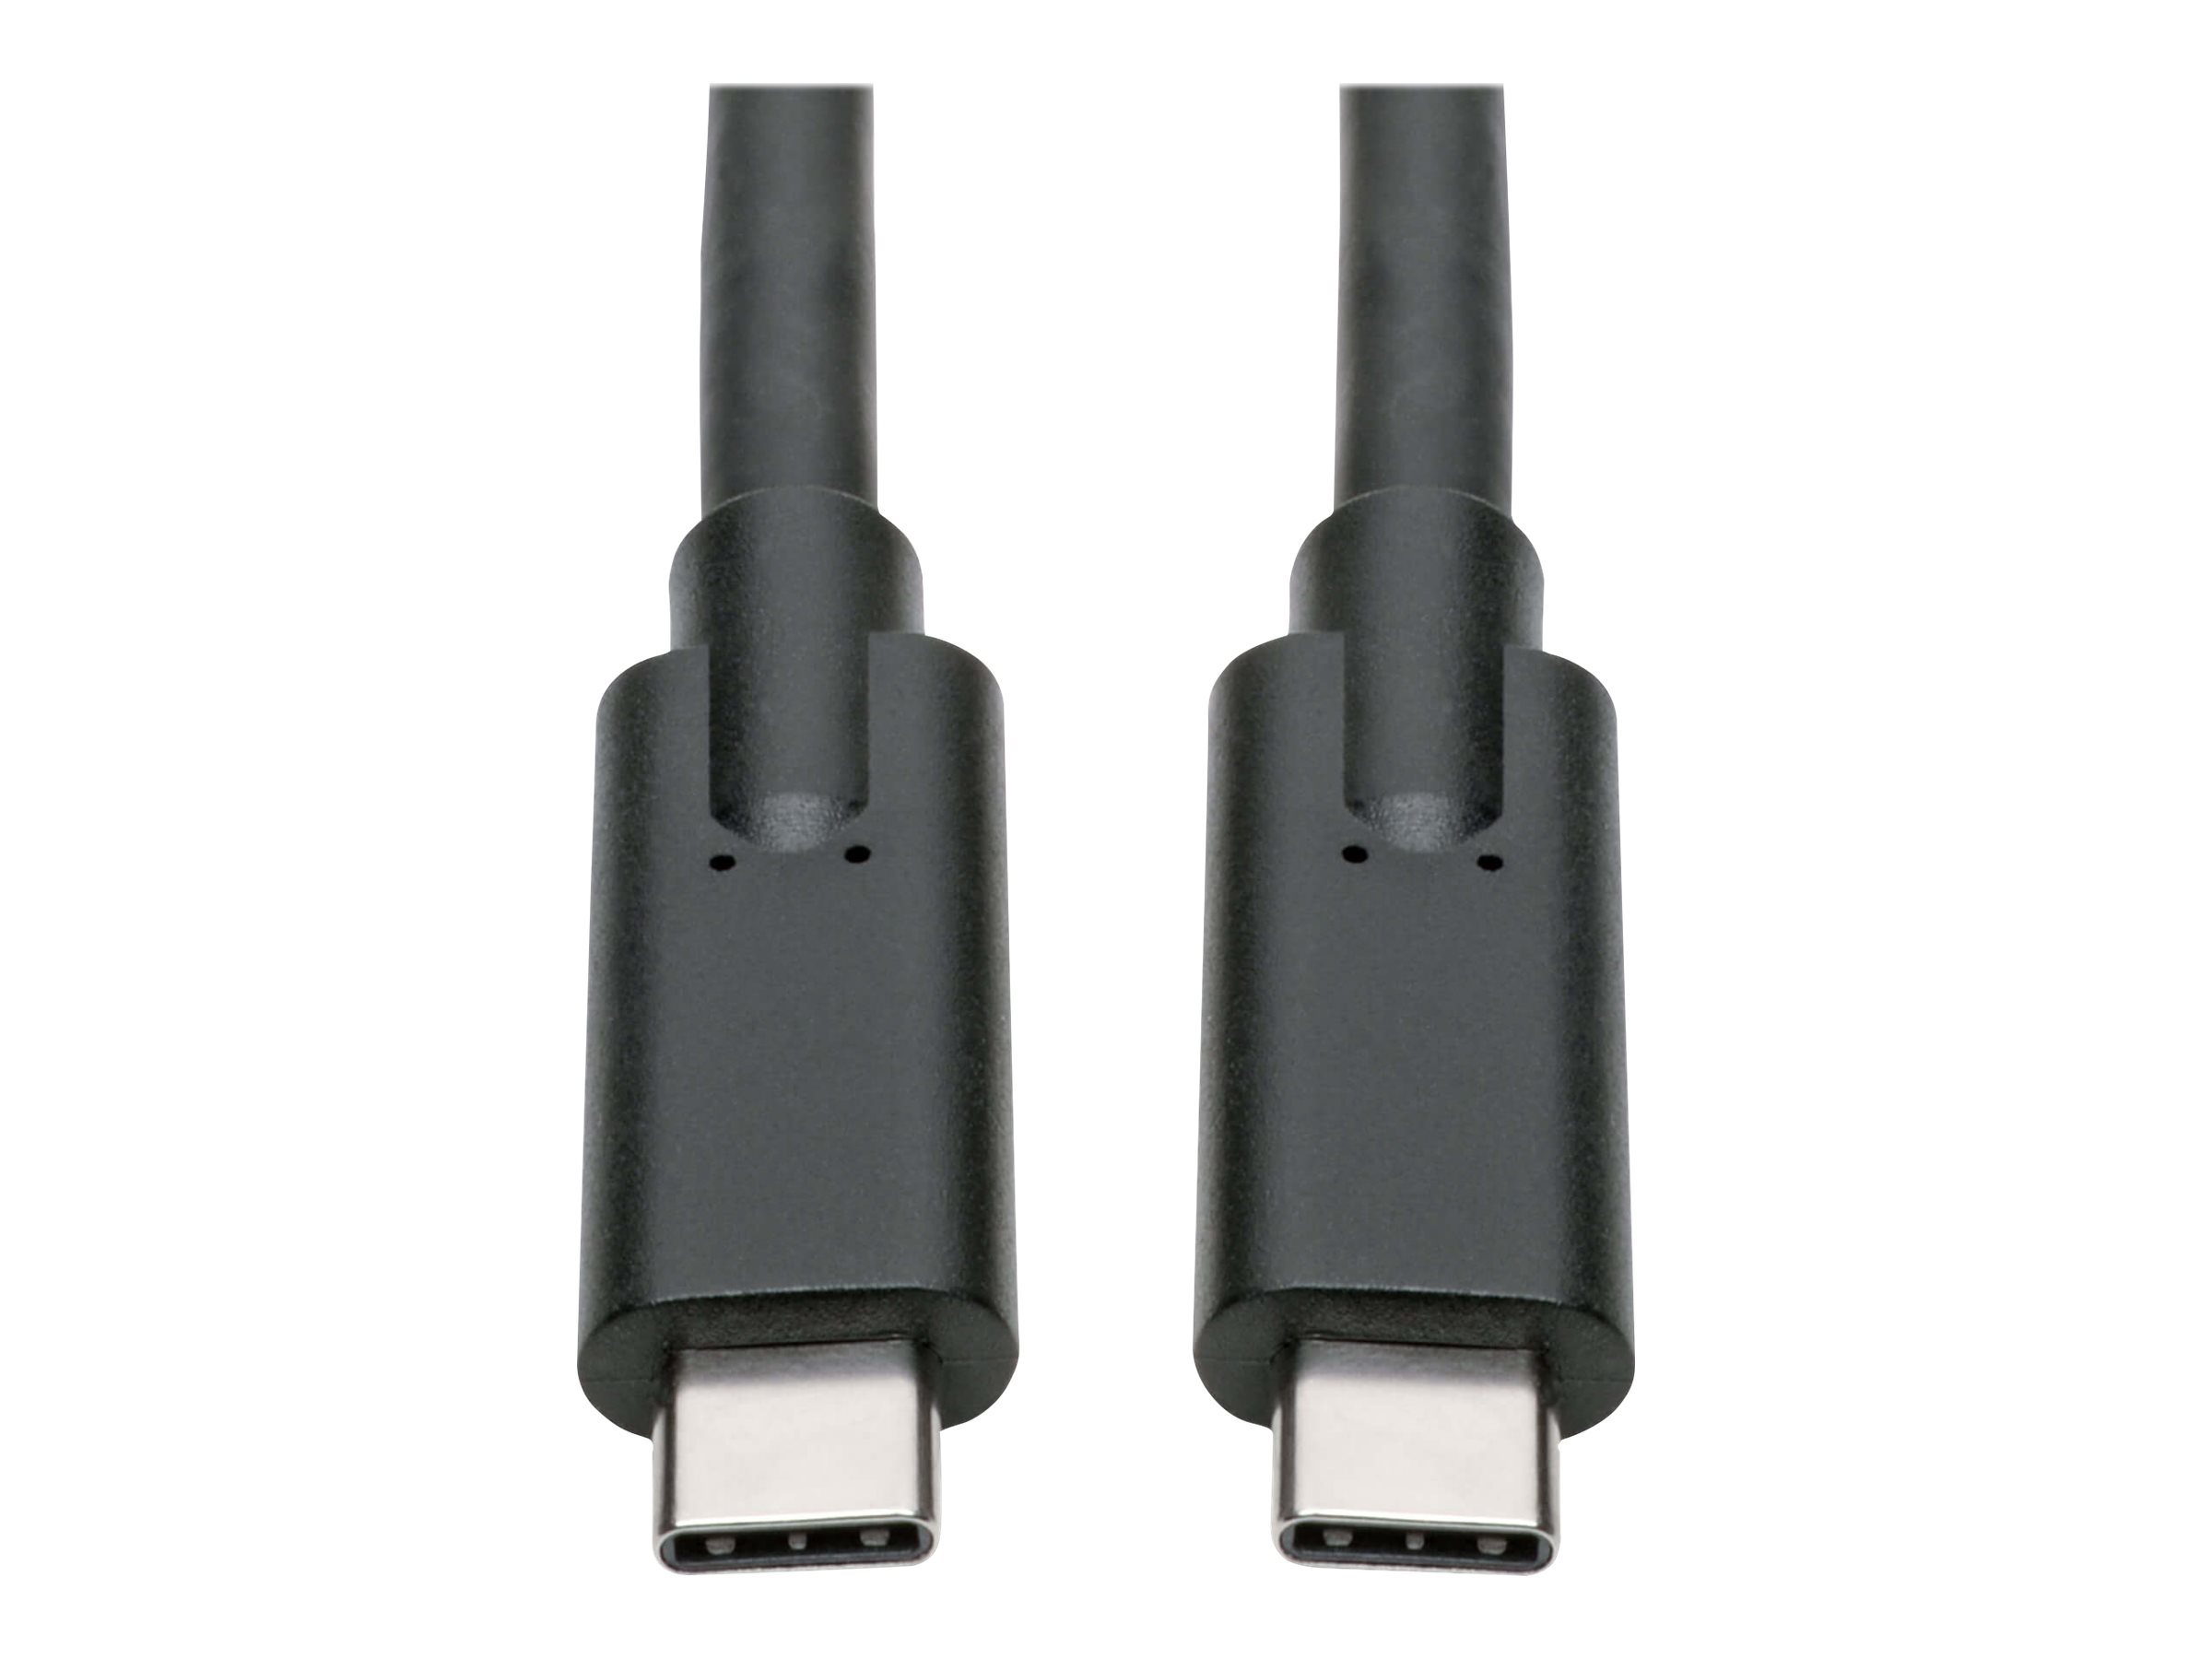 Eaton Tripp Lite Series USB-C Cable (M/M) - USB 3.2, Gen 1 (5 Gbps), 5A Rating, Thunderbolt 3 Compatible, 6 ft. (1.83 m) - USB-K